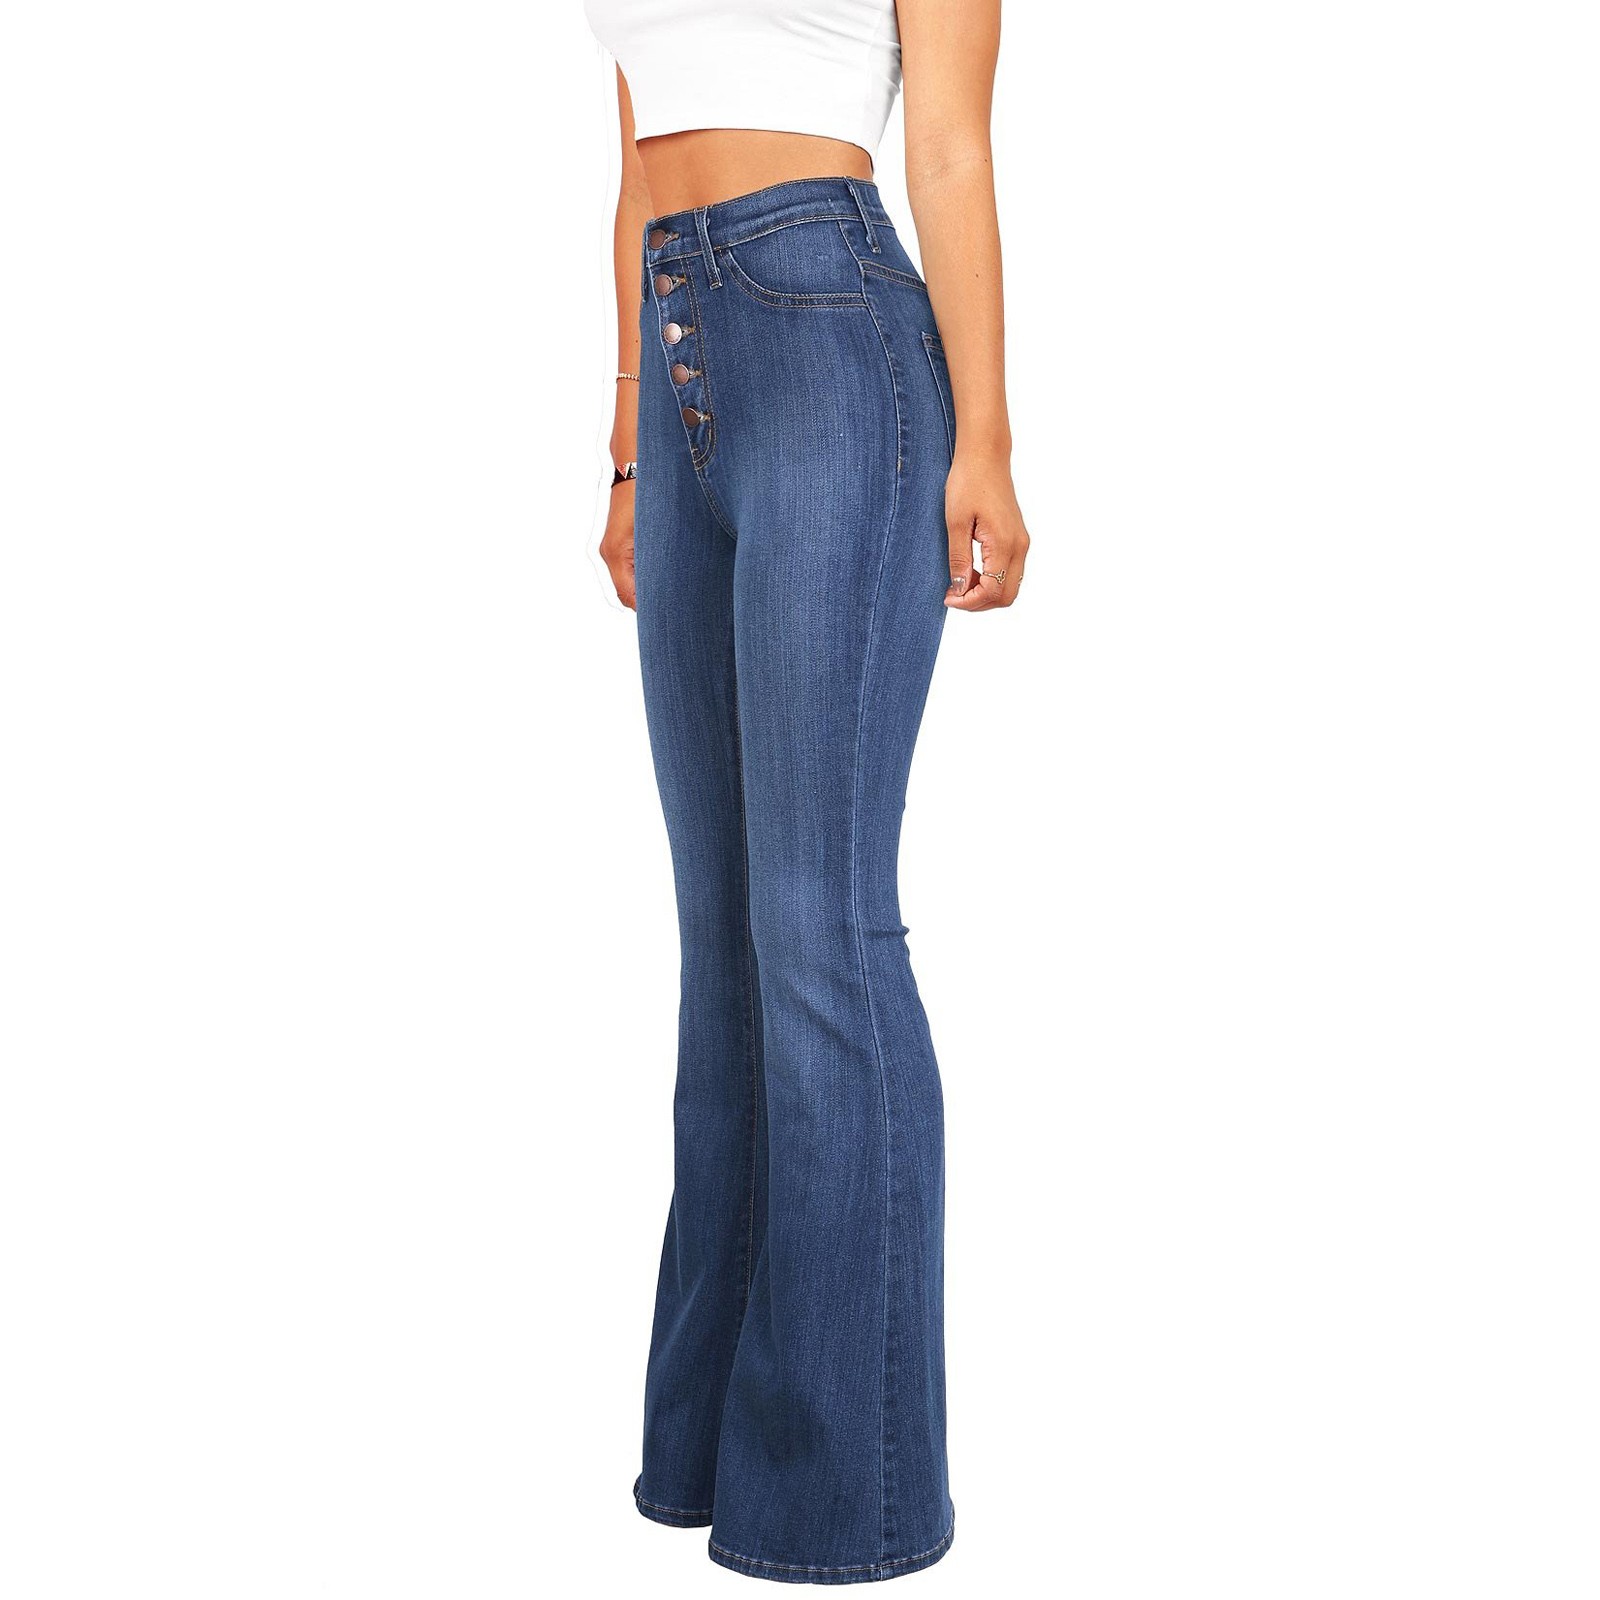 NARABB Women's Jeans Long Pants High-waist Wide-legged Pants Teenagers ...